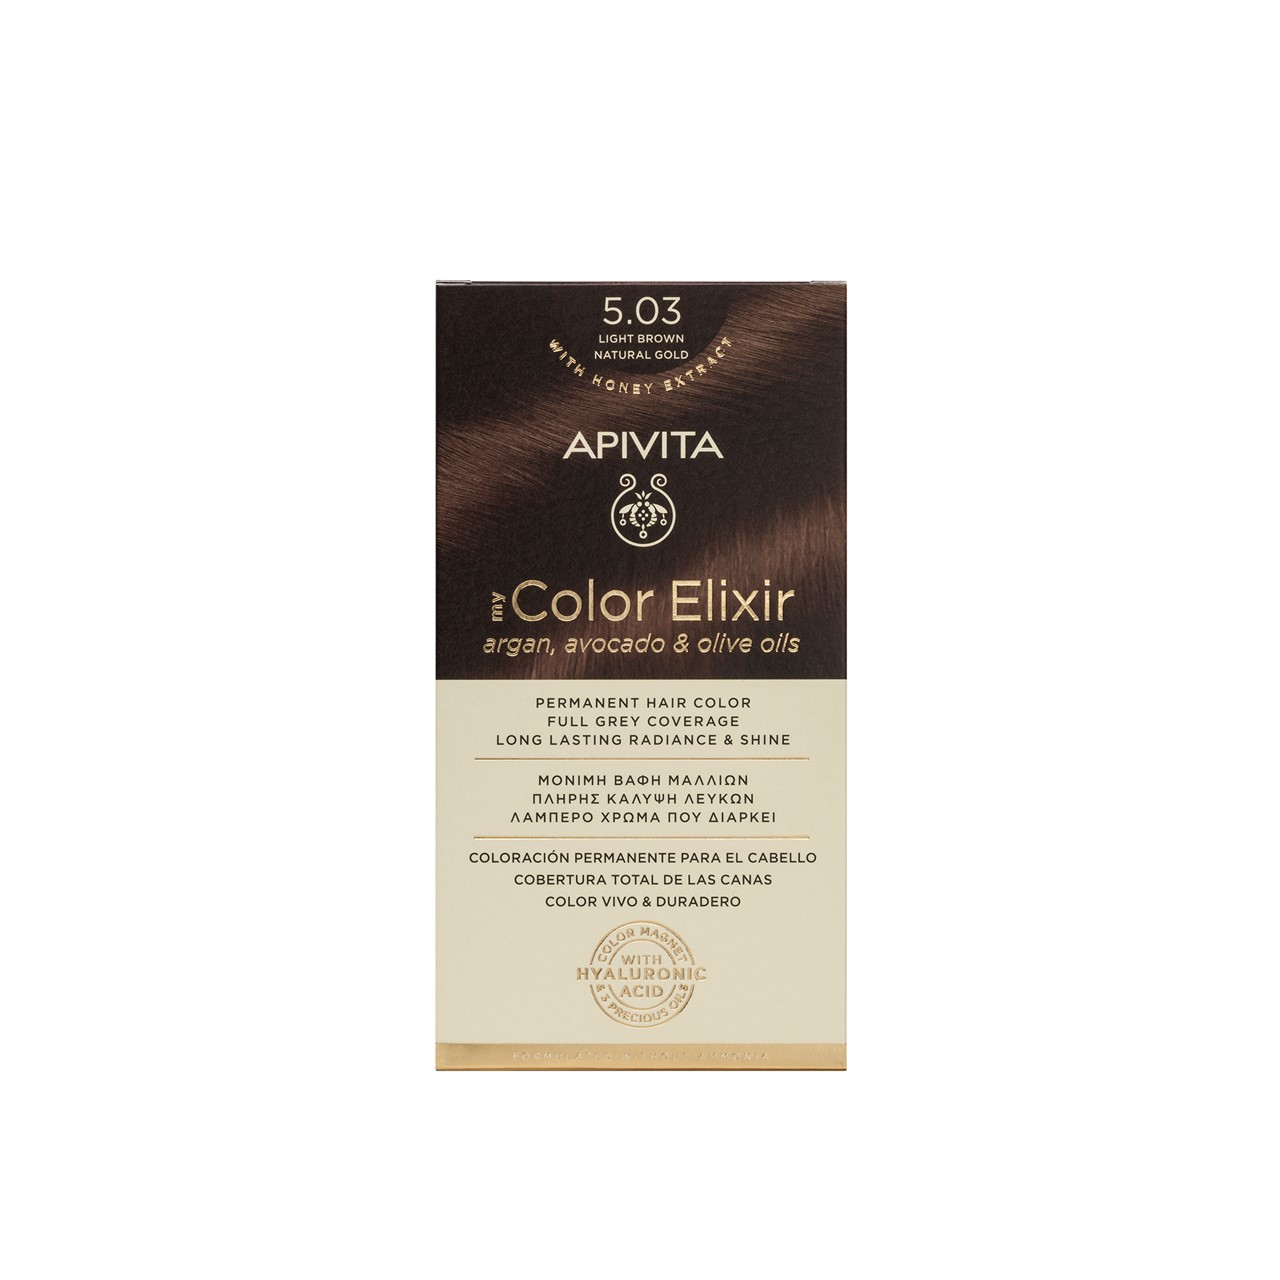 APIVITA My Color Elixir 5.03 Permanent Hair Color